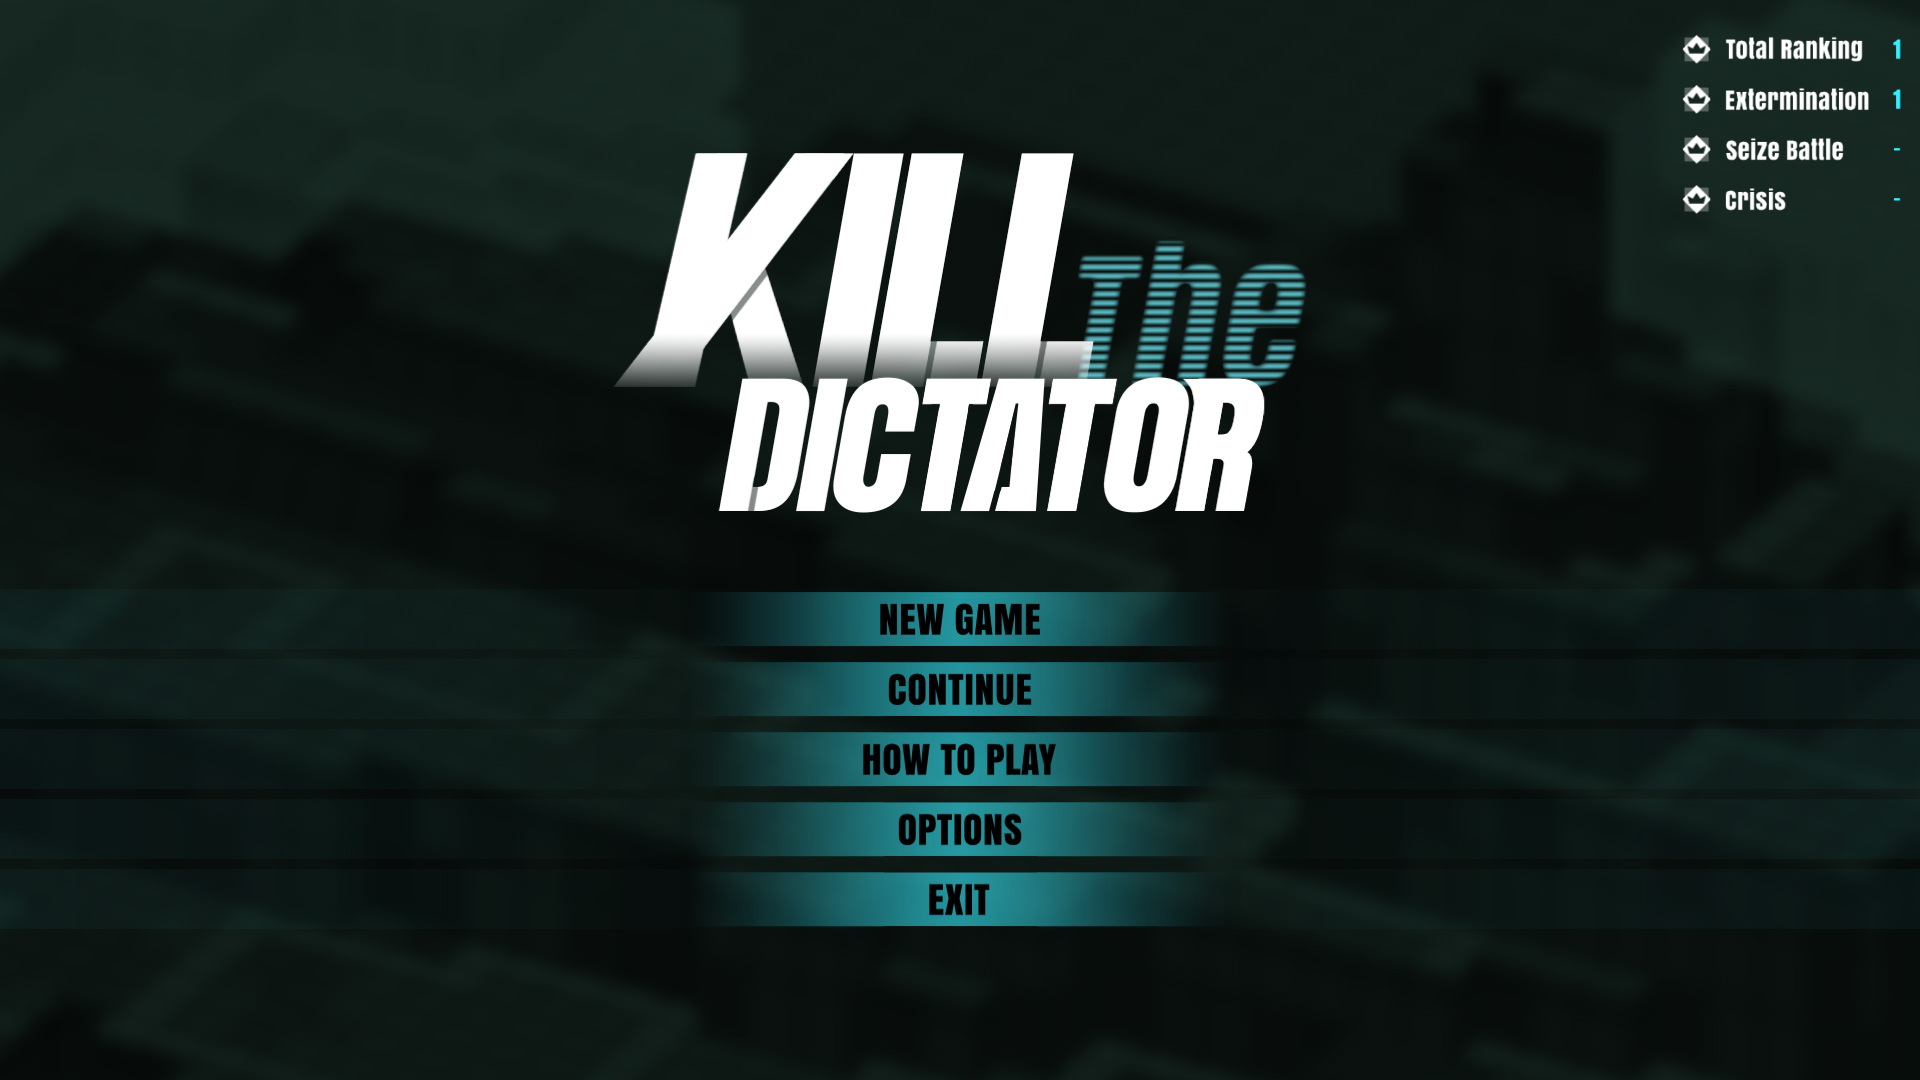 Kill the Dictator Free Download